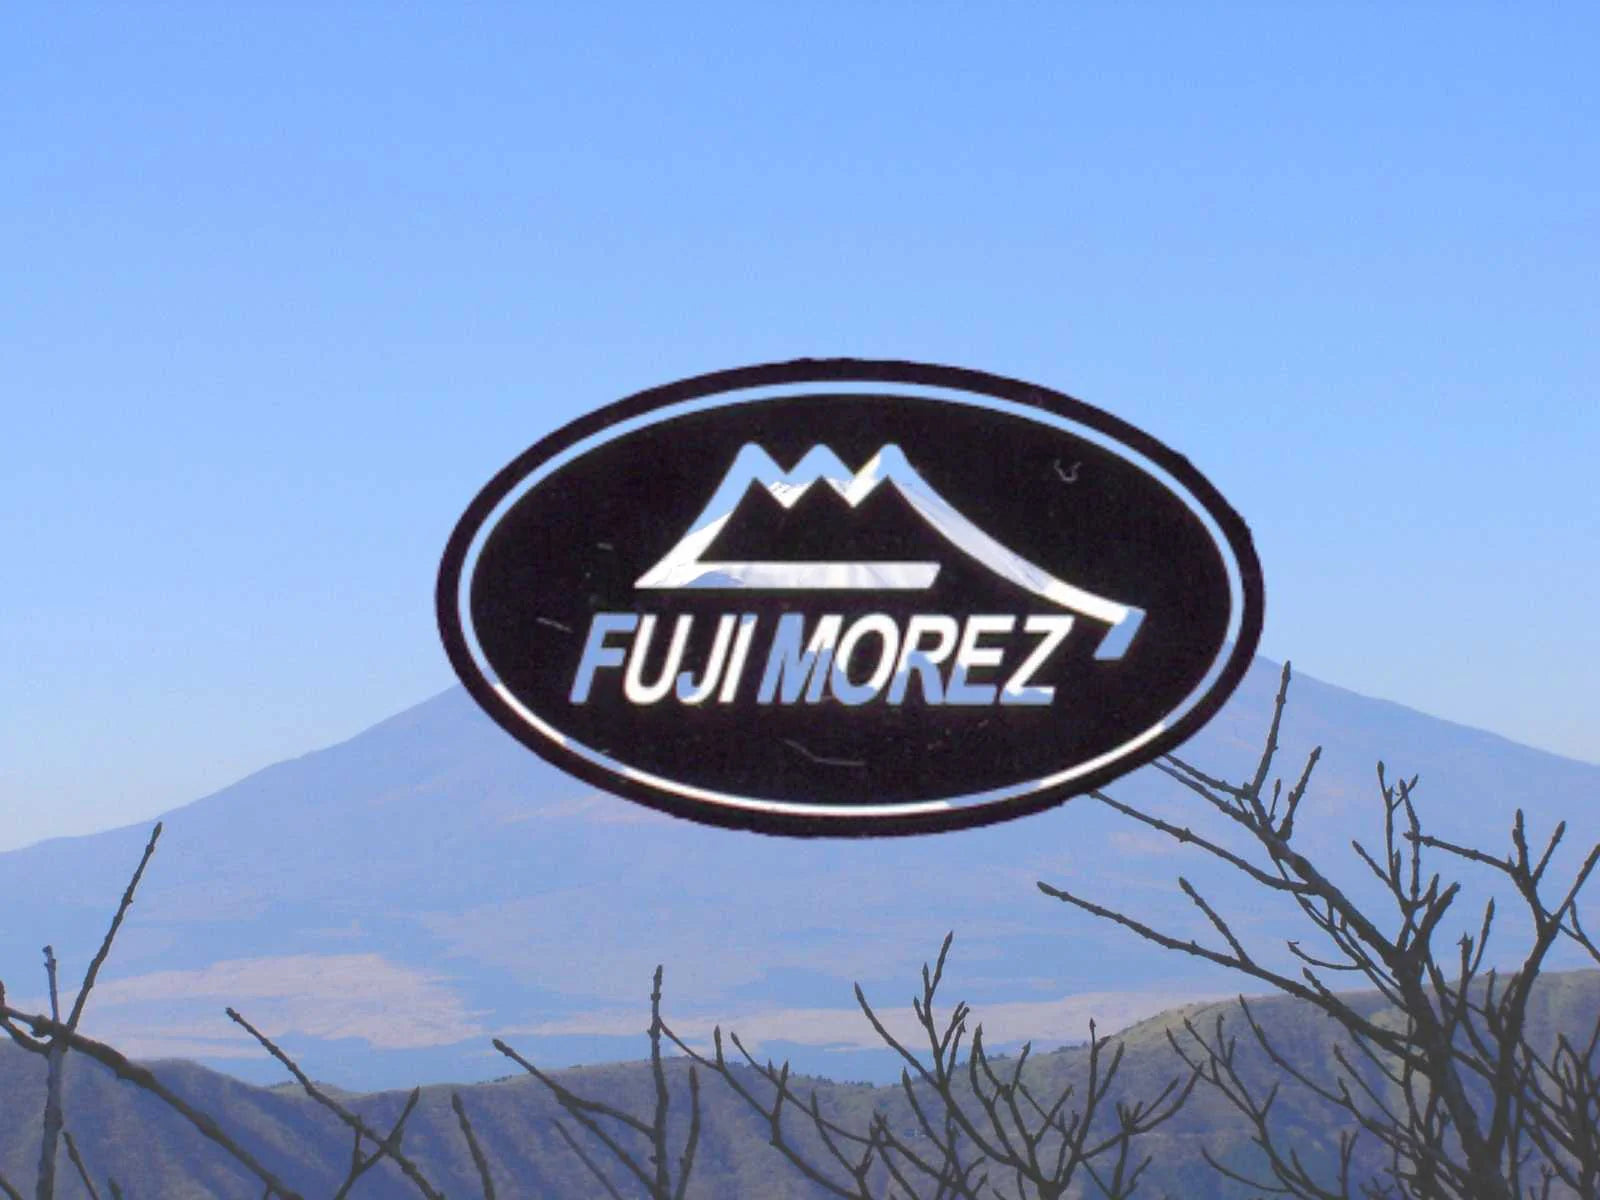 Fuji MoreZ Scissors From Japan